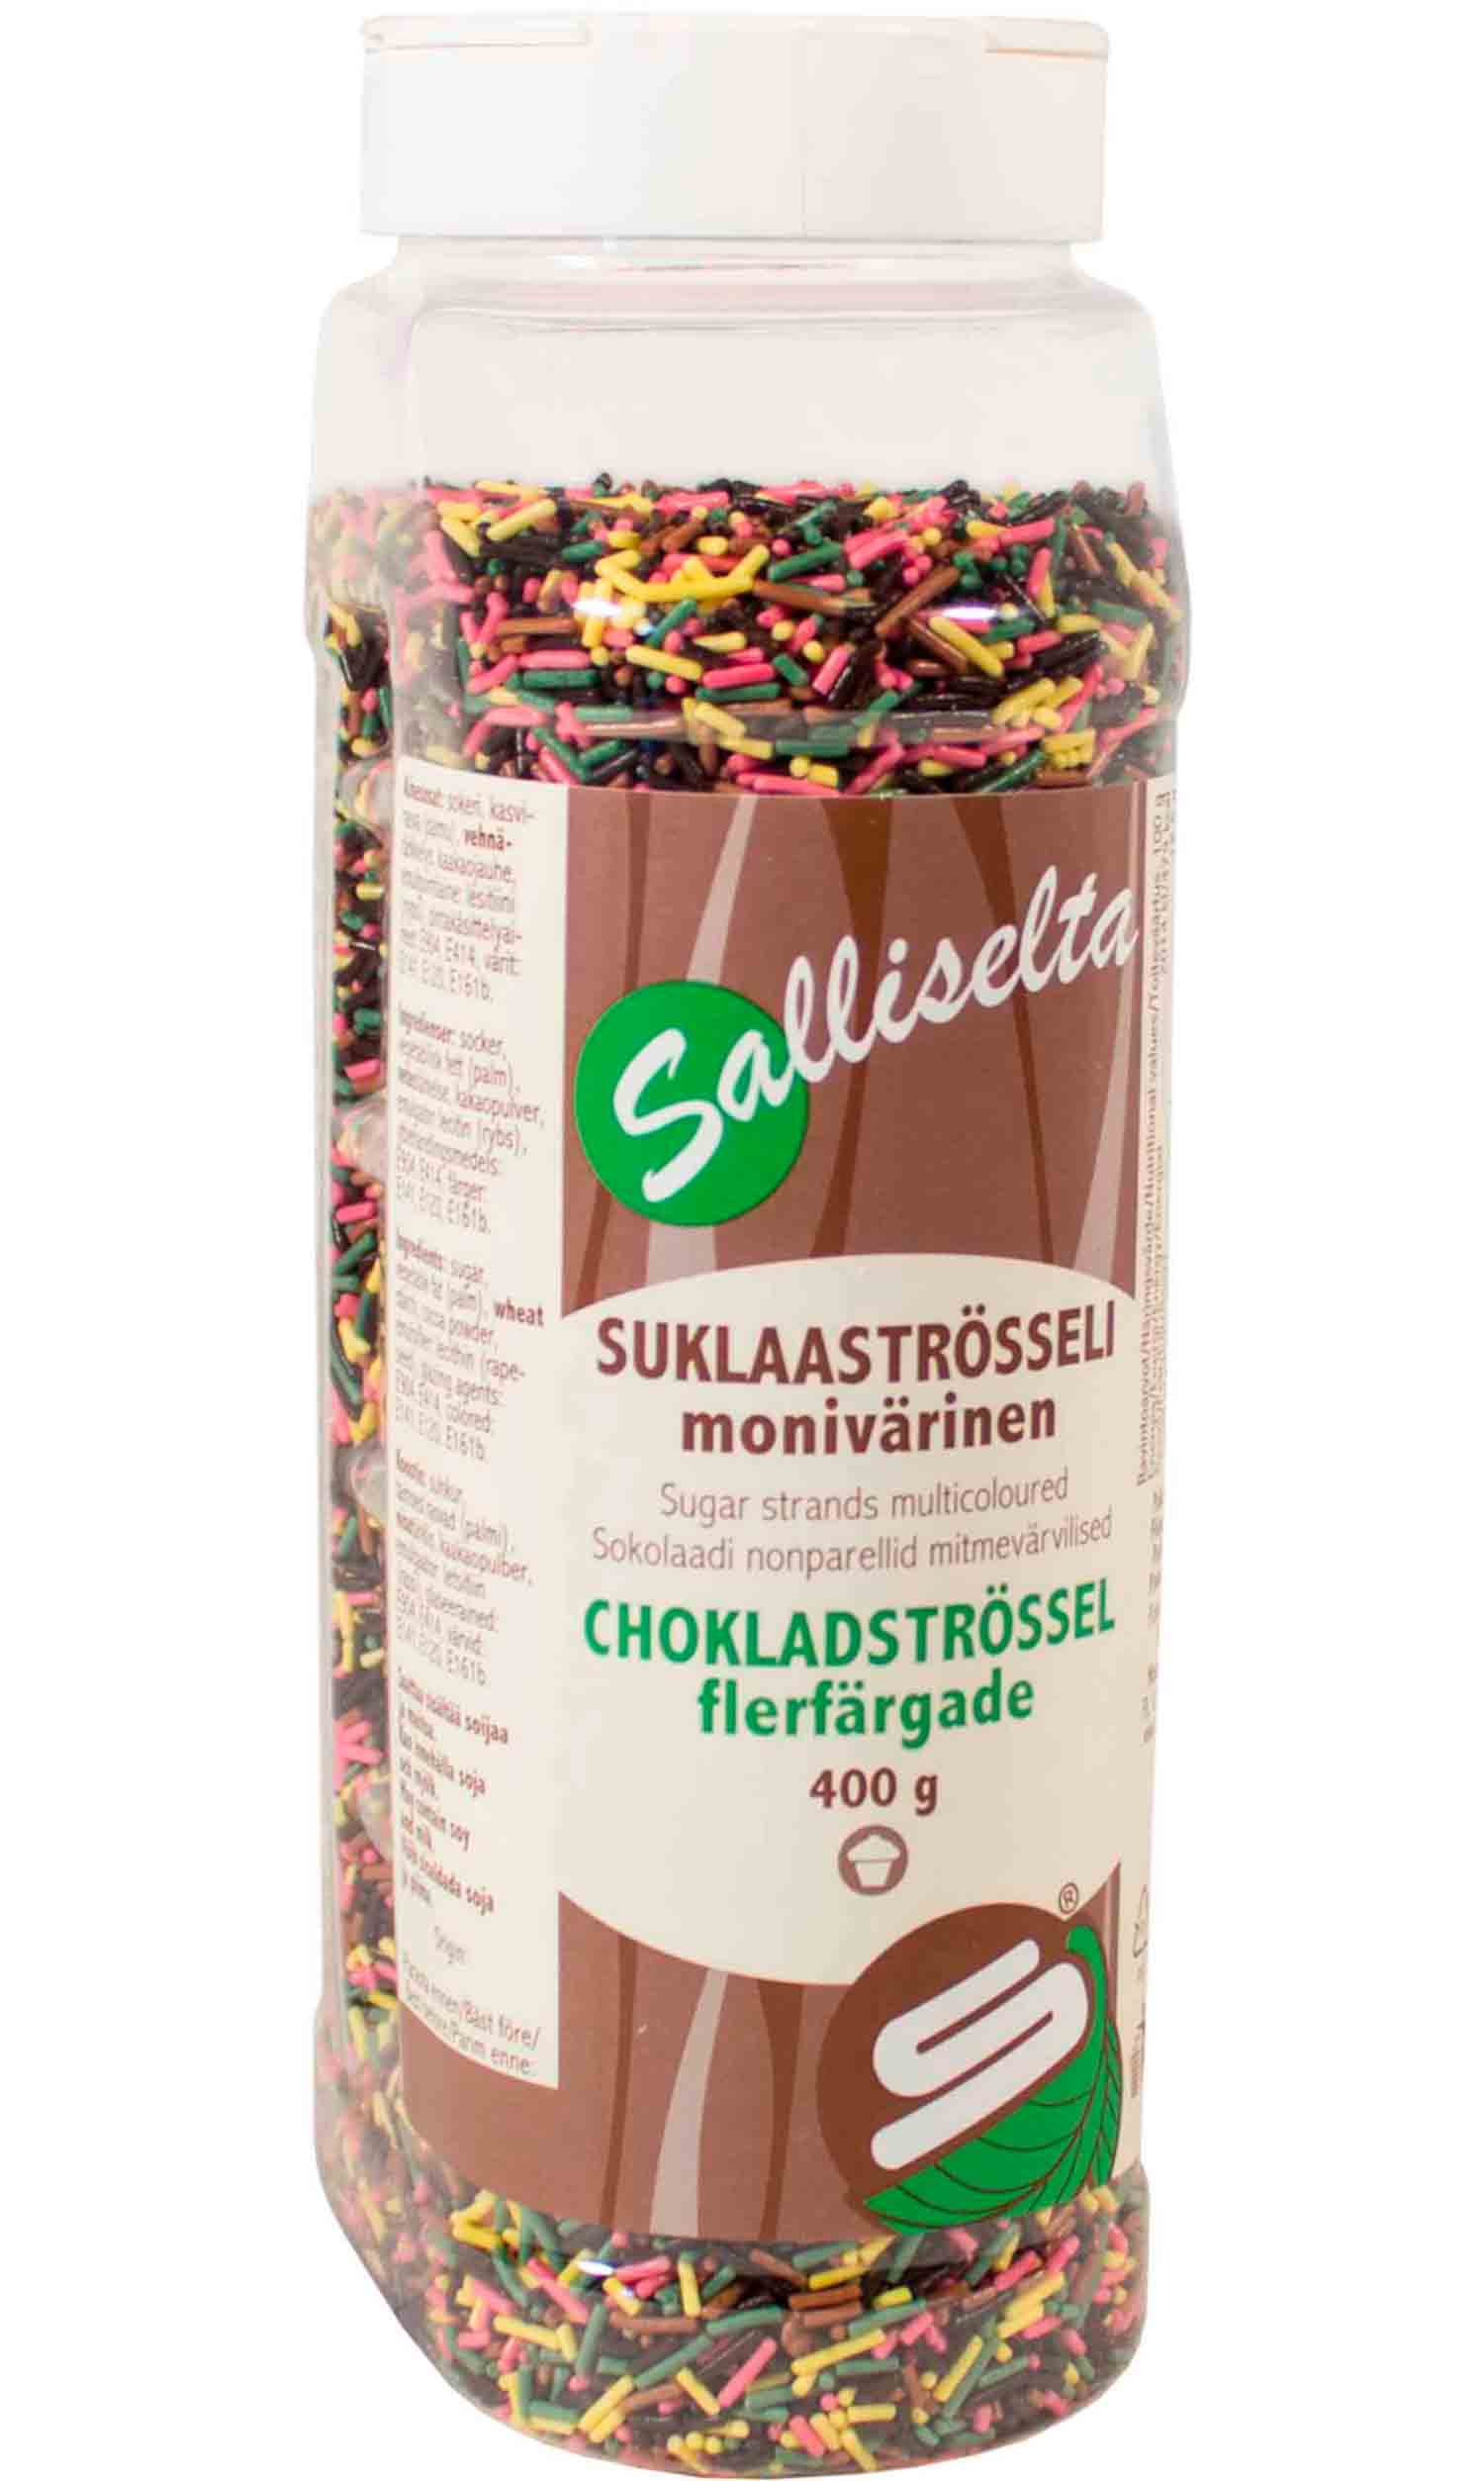 Chocolate sugar strands multicoloured 400g